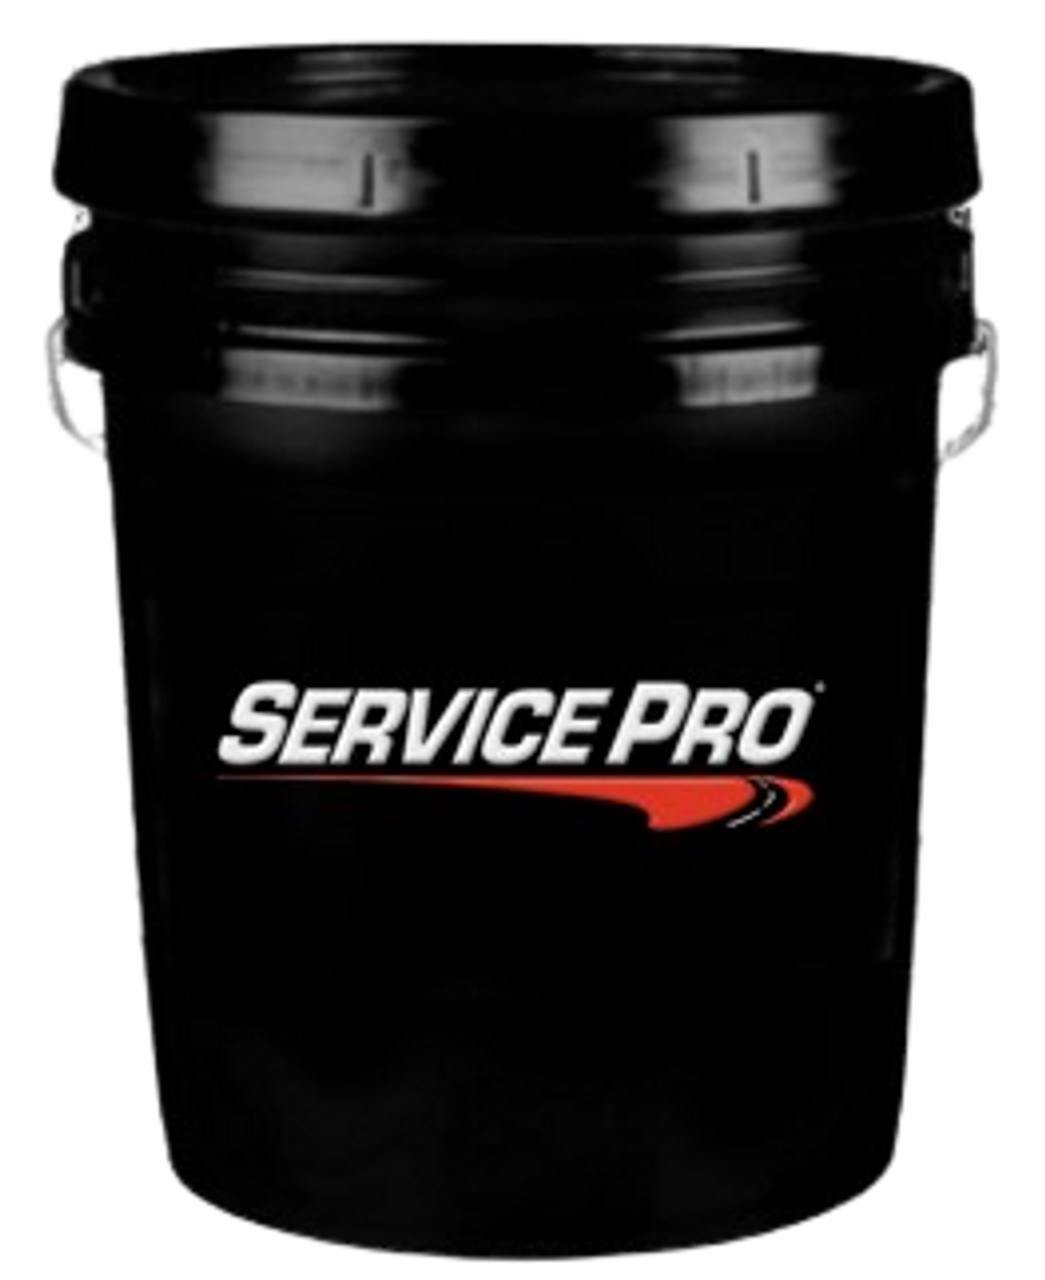 Service Pro Premium AW32 Hydraulic Oil - 5 gal Pail